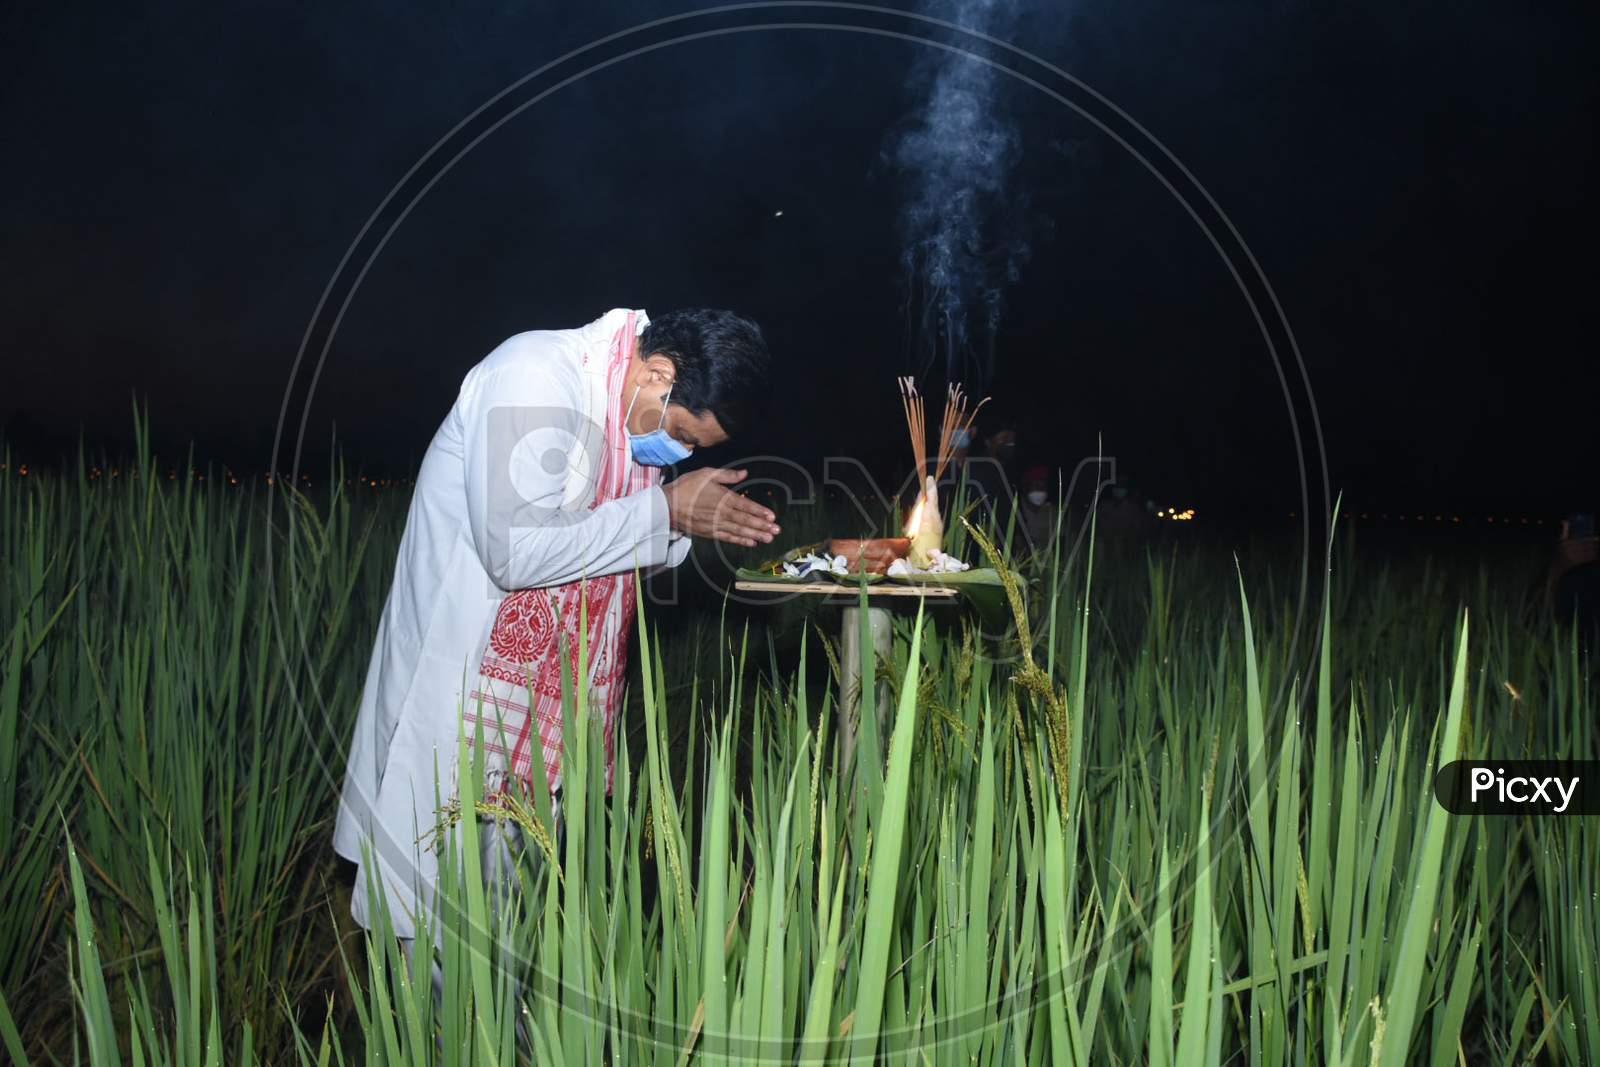 Assam Chief Minister Sarbananda Sonowal lighting akashbanti (earthen lamp) at a paddy field on the occasion of Kati Bihu at Bamunpara Monpur Pathar in Mangaldoi, in  Darrang district of Assam on oct 17,2020.